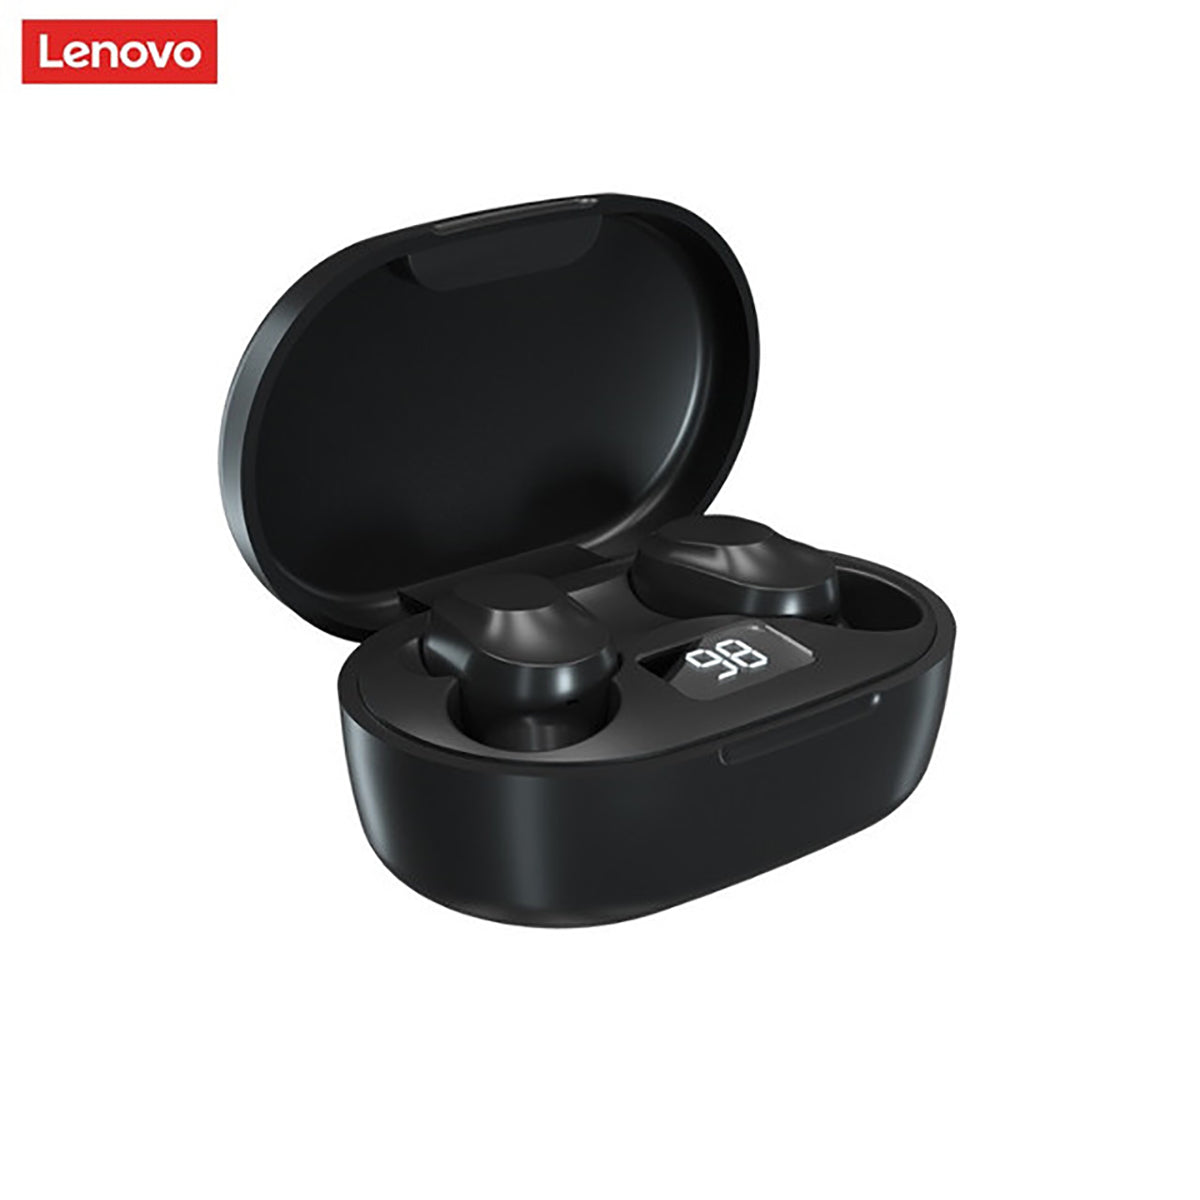 Lenovo XT91 Bluetooth Headphones Black